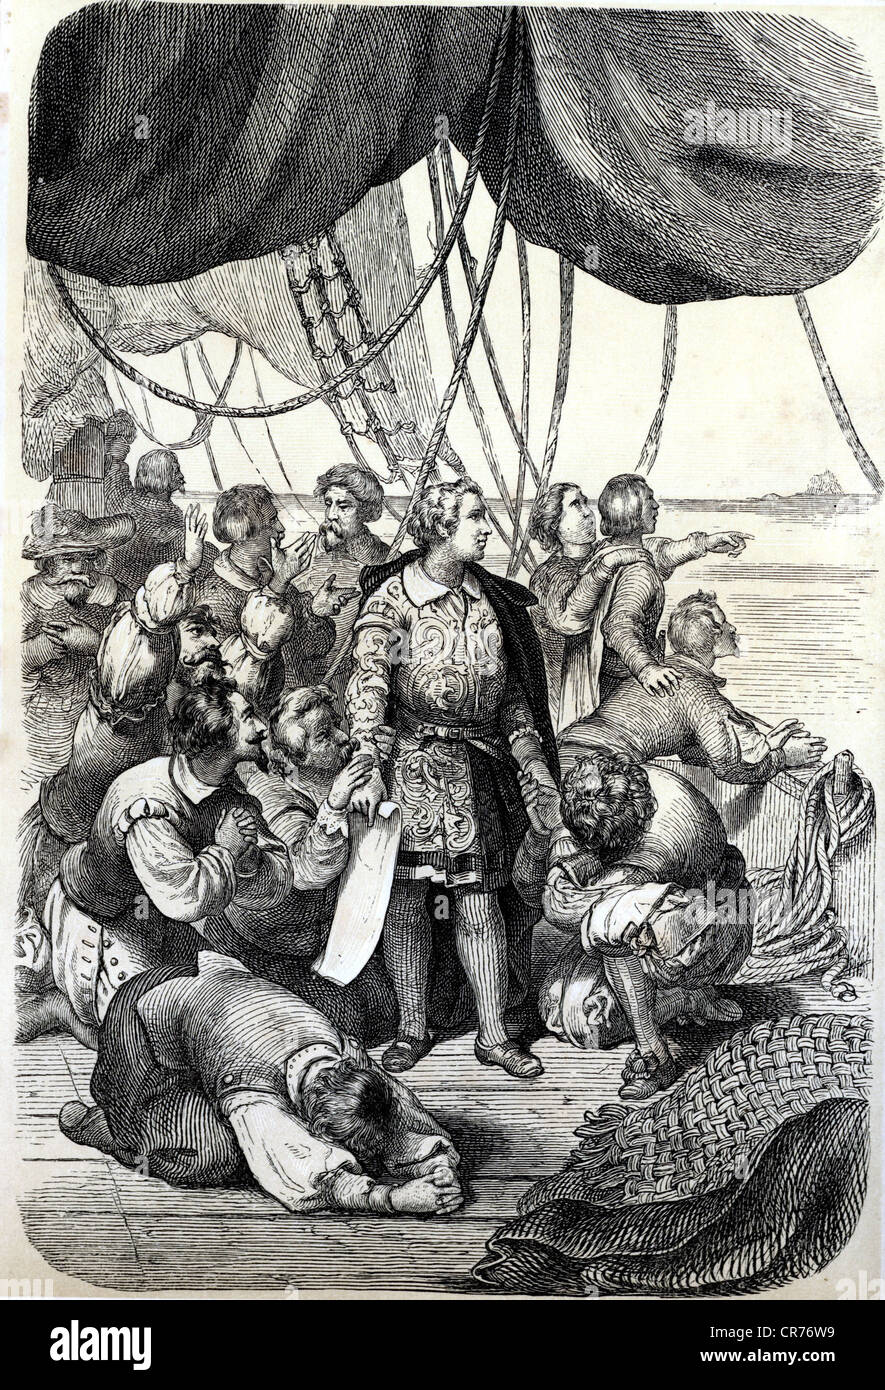 Columbus, Christopher, 1451 - 1506, explorer, immagine del libro 'Das Leben des Meeres' (vita in mare), 1862, Foto Stock